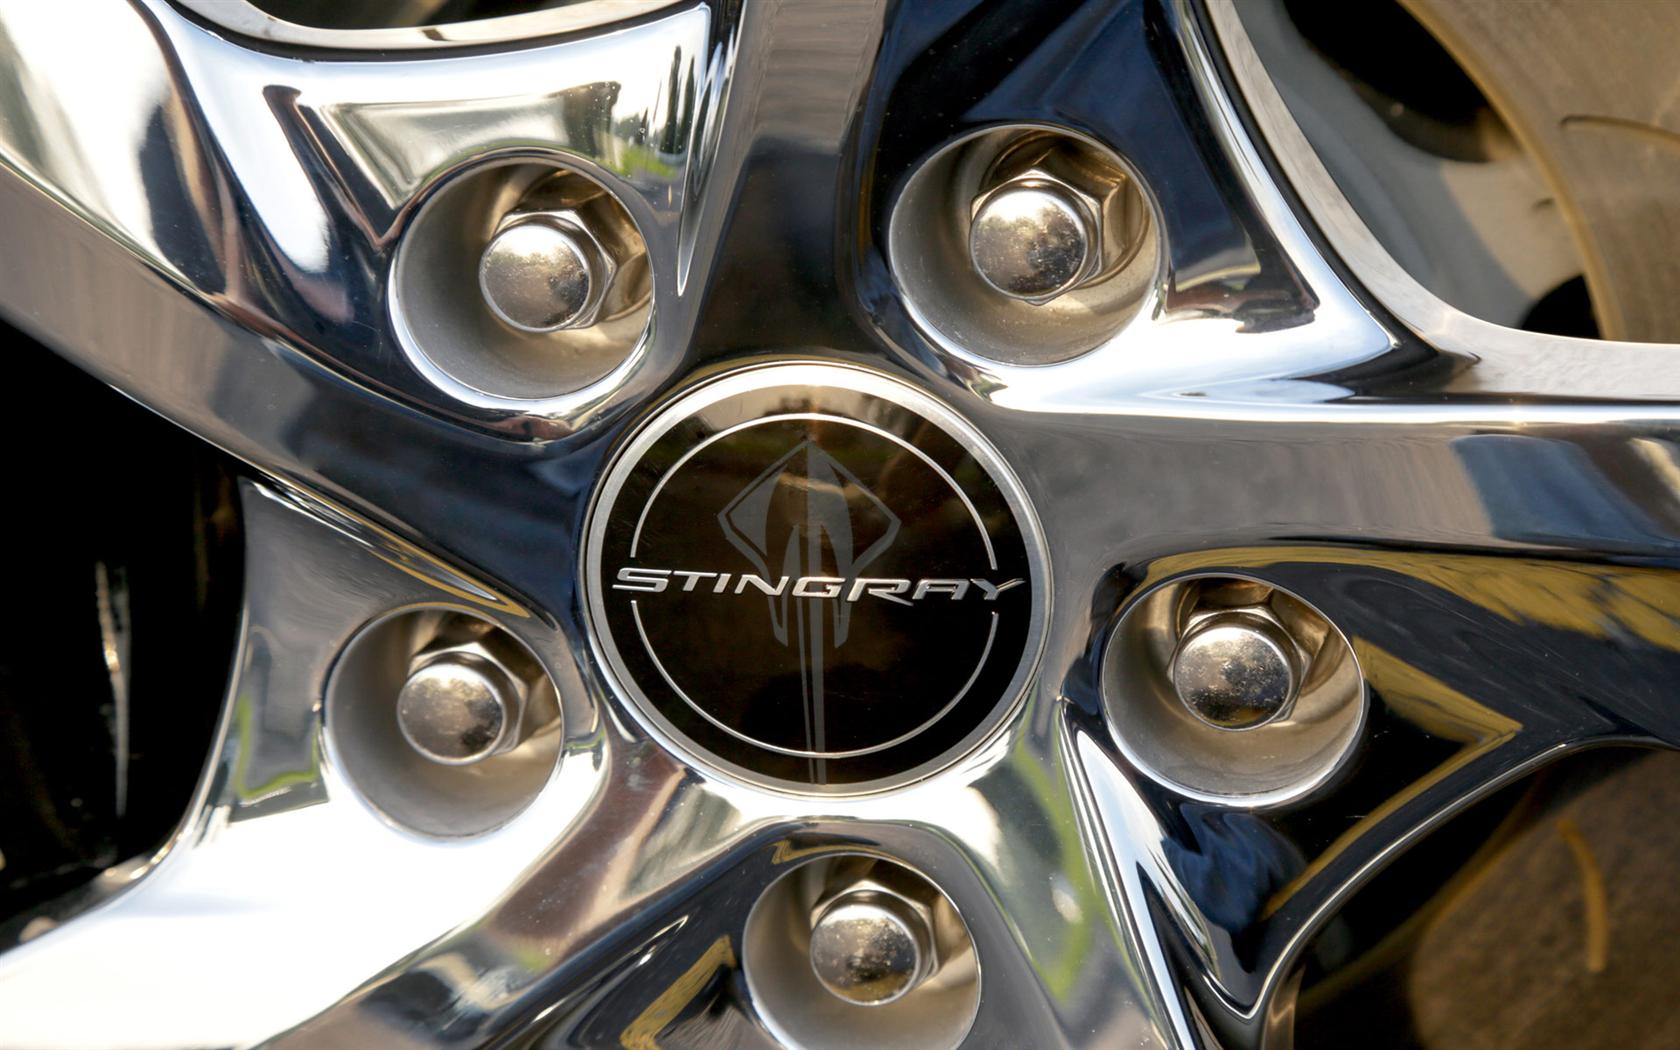 2014 Chevrolet Stingray Premiere Edition